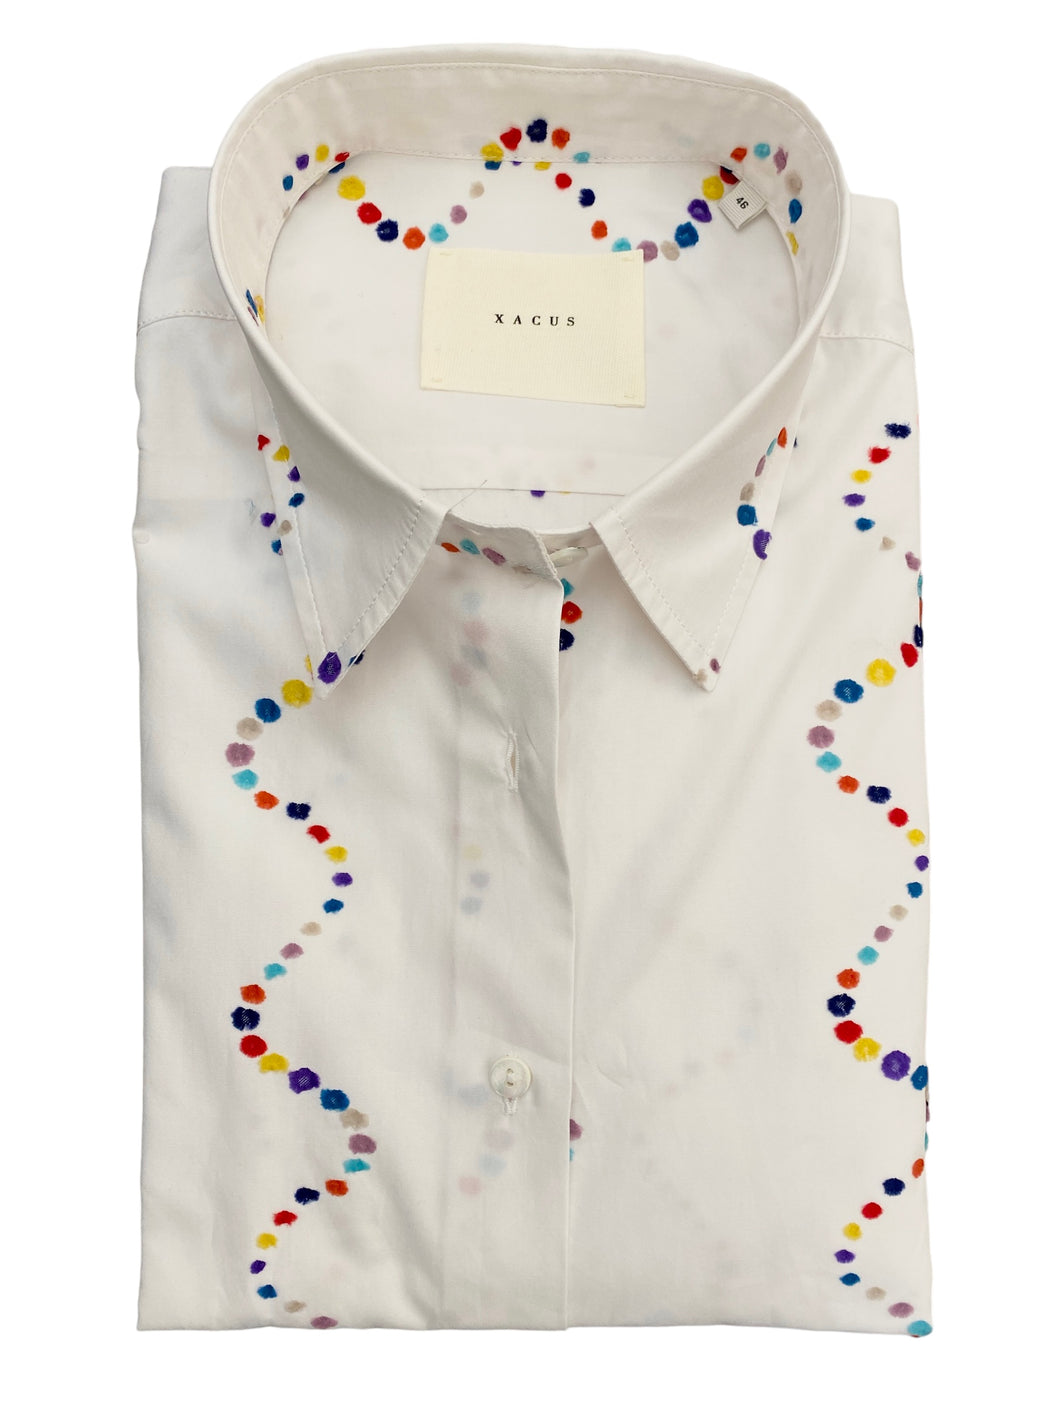 Xacus Women's Shirt - White with Confetti